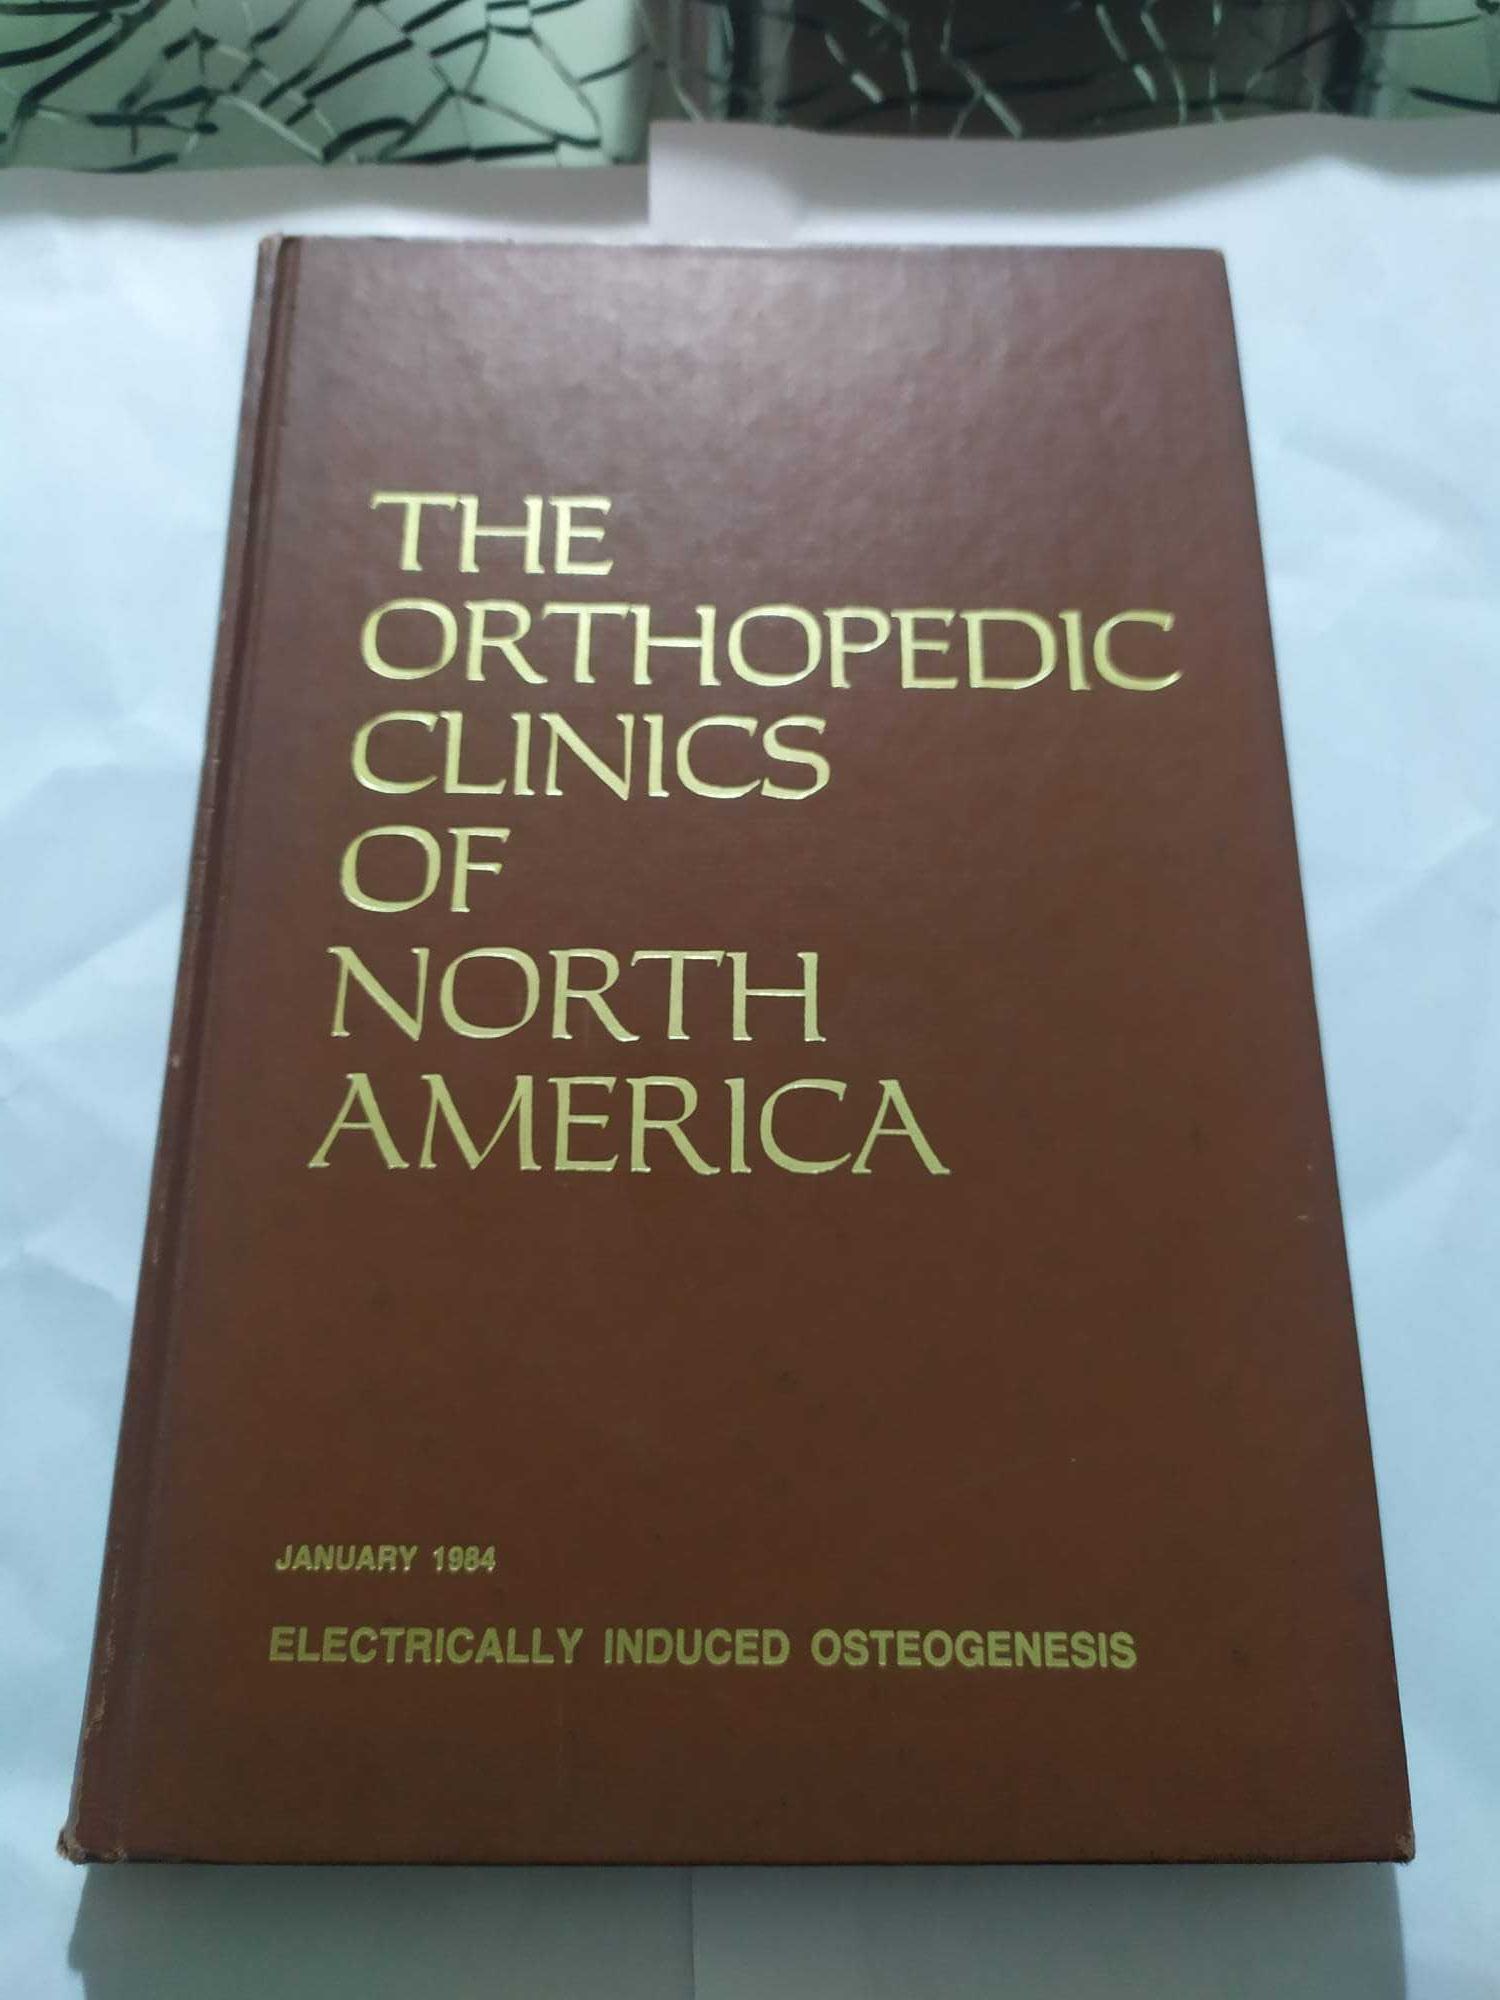 Livro 'The Orthopedic Clinics of North America' com recibo 1984